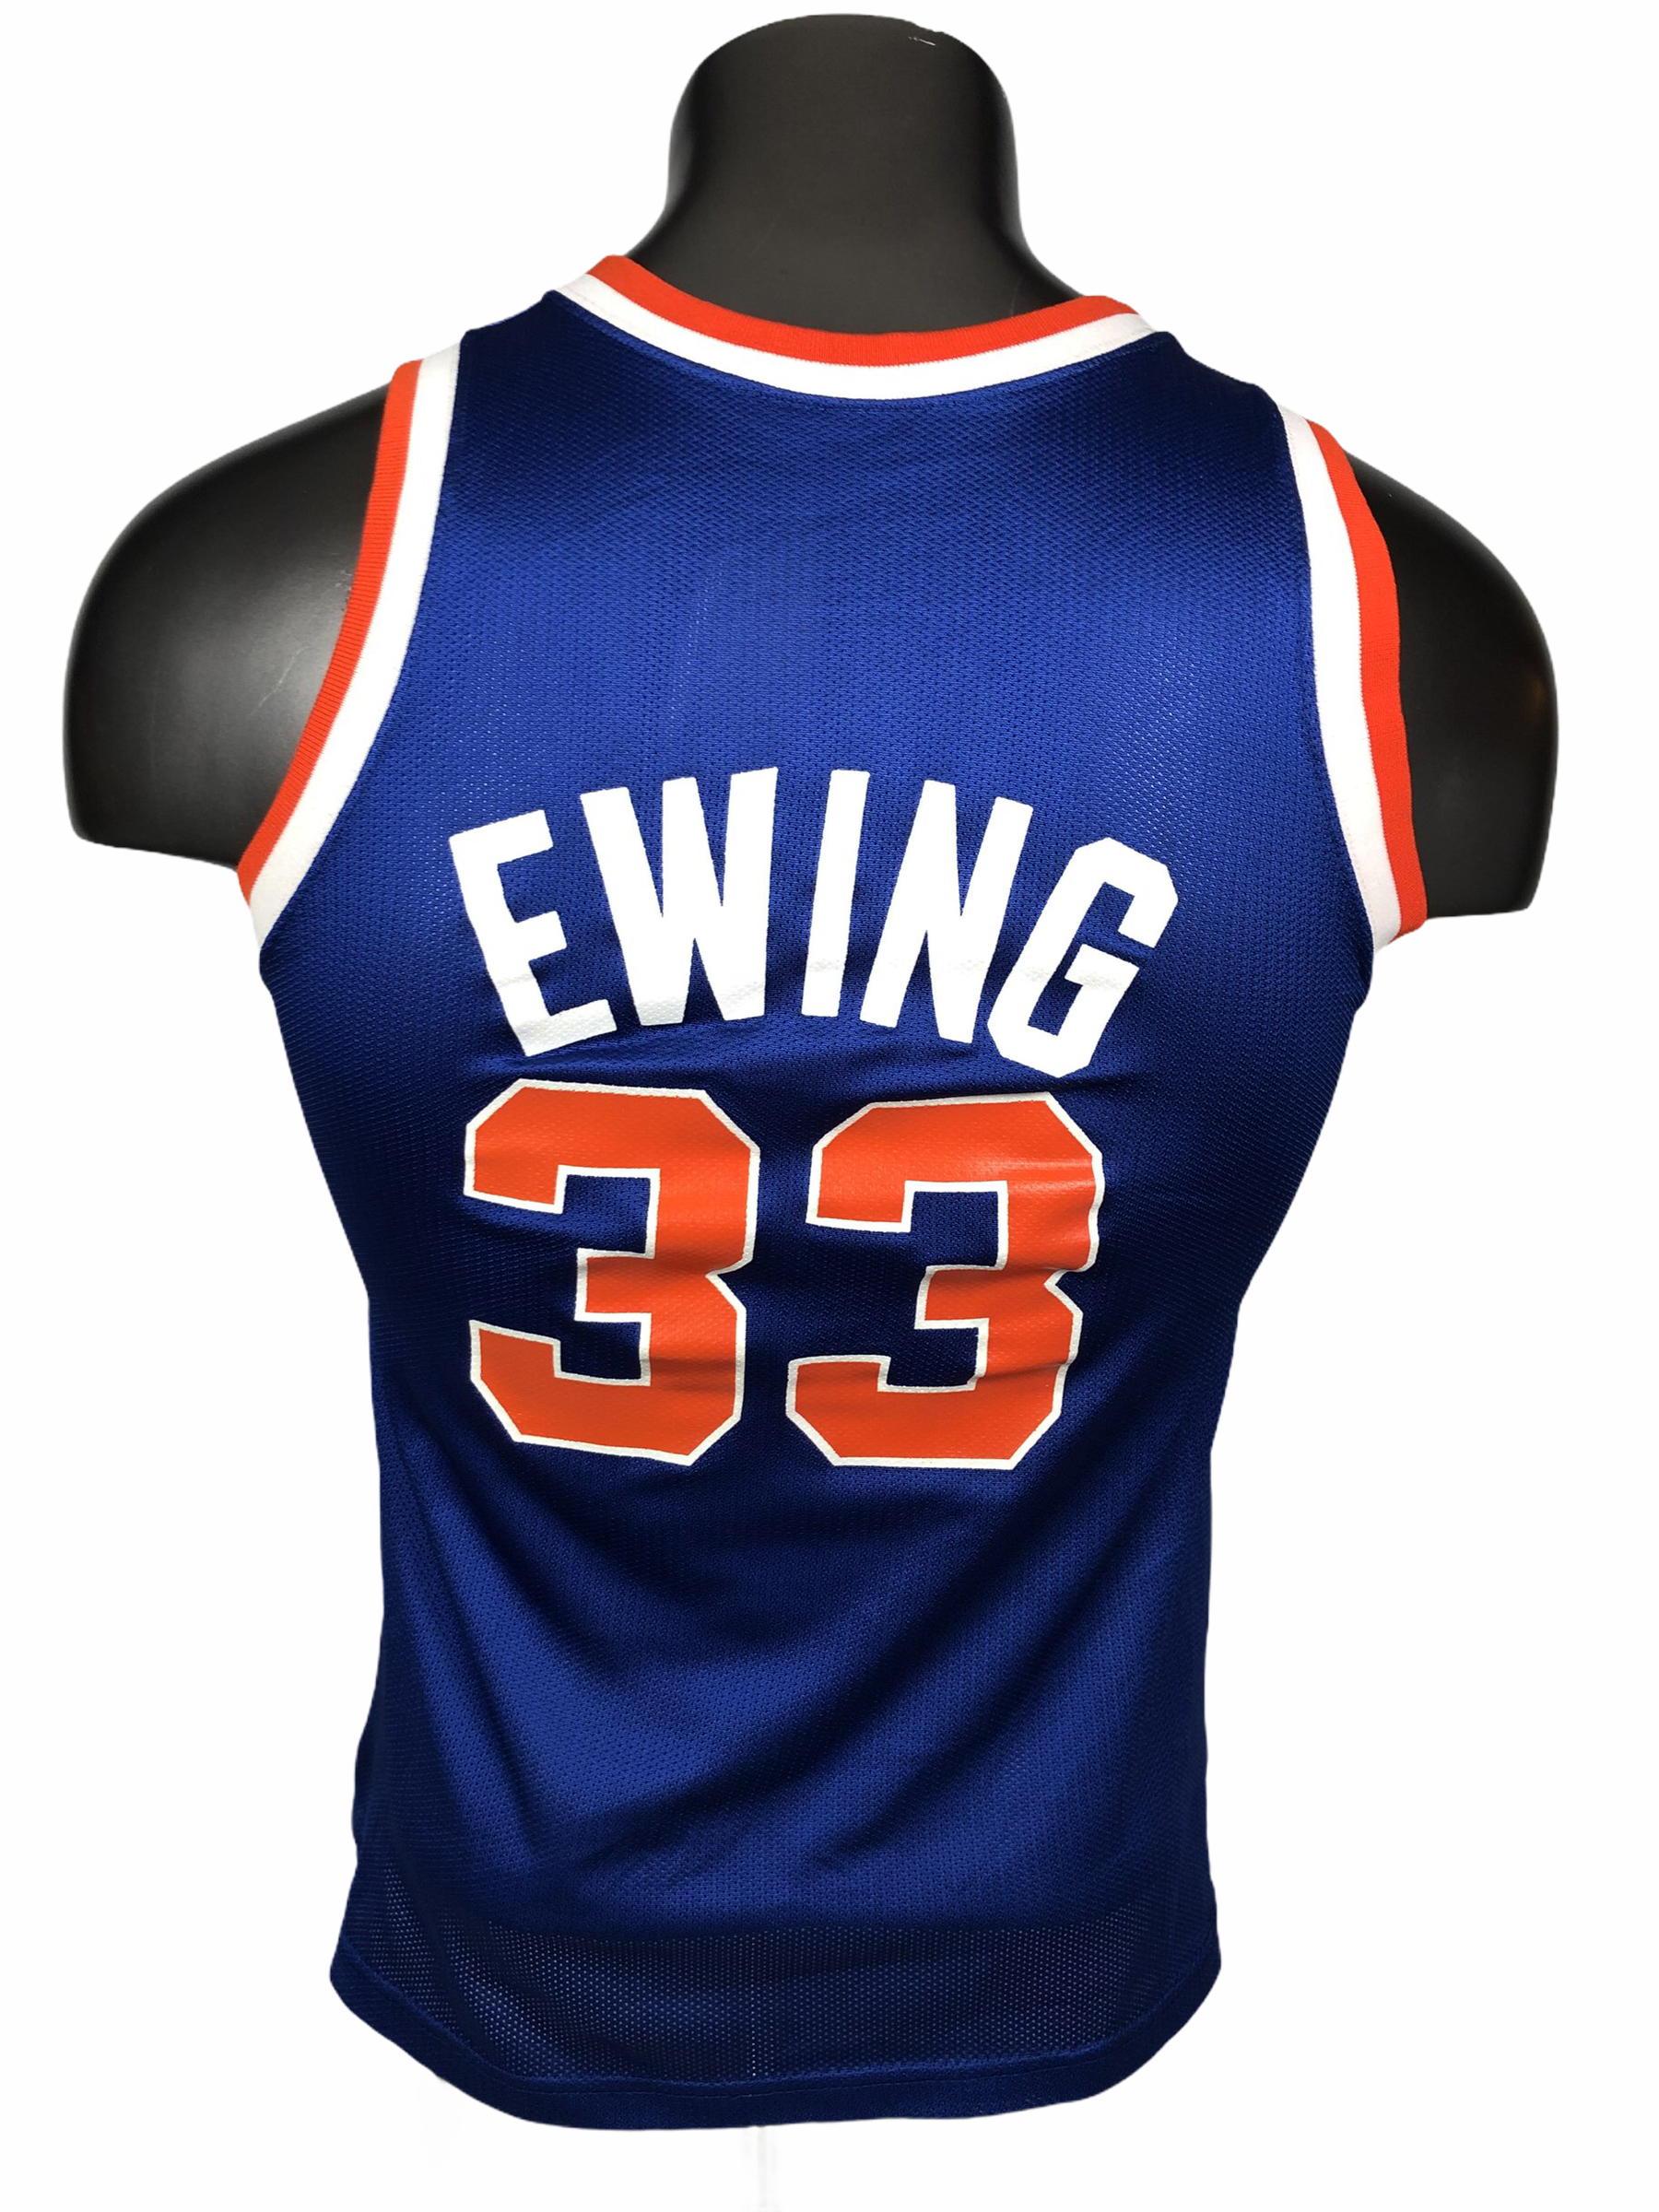 Vintage 90s New York Knicks Patrick Ewing Champion Reversible 